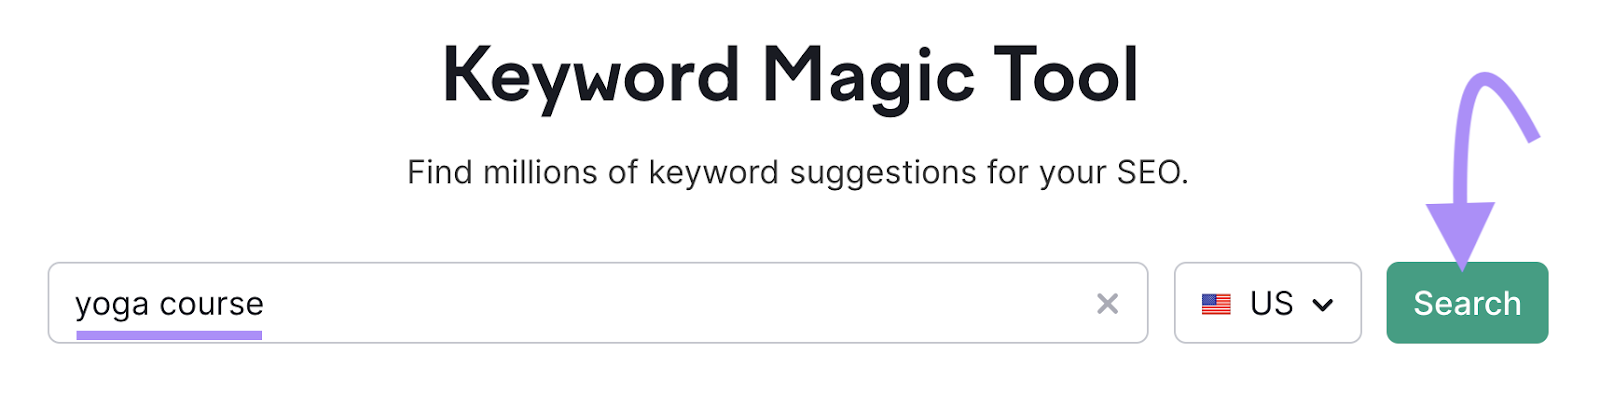 "yoga course" entered into the Keyword Magic Tool search bar